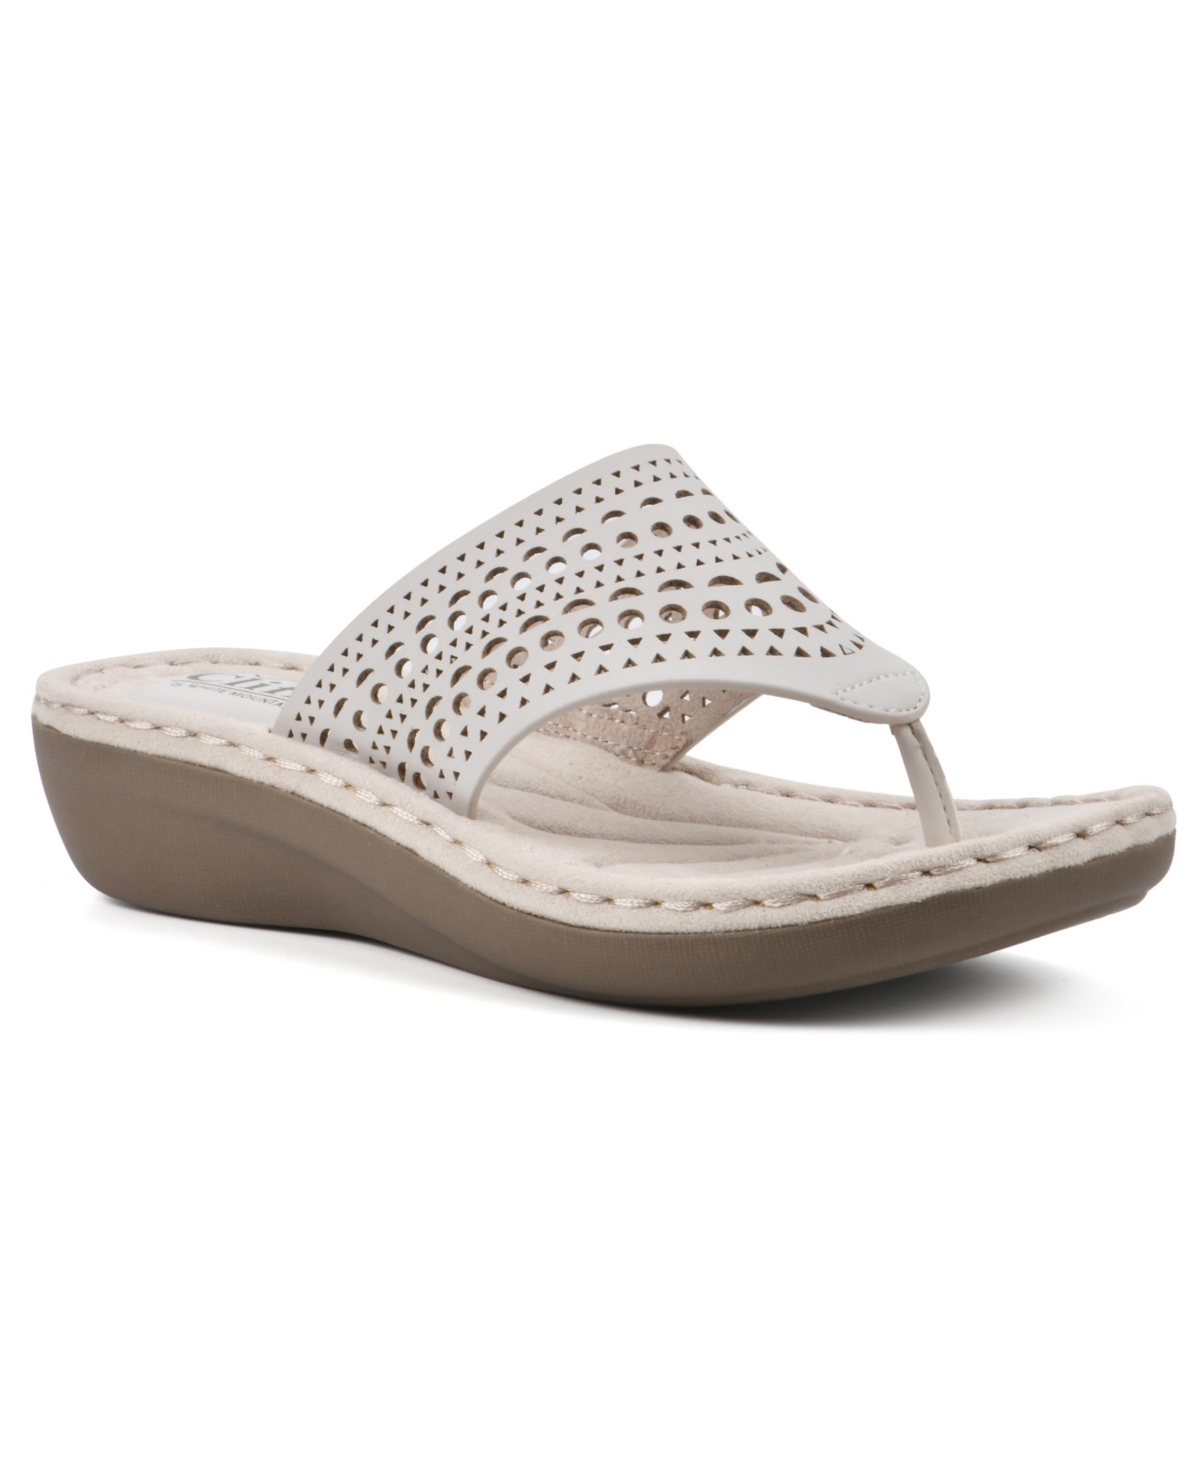 Women's Compact Thong Comfort Sandal - White, Nubuck